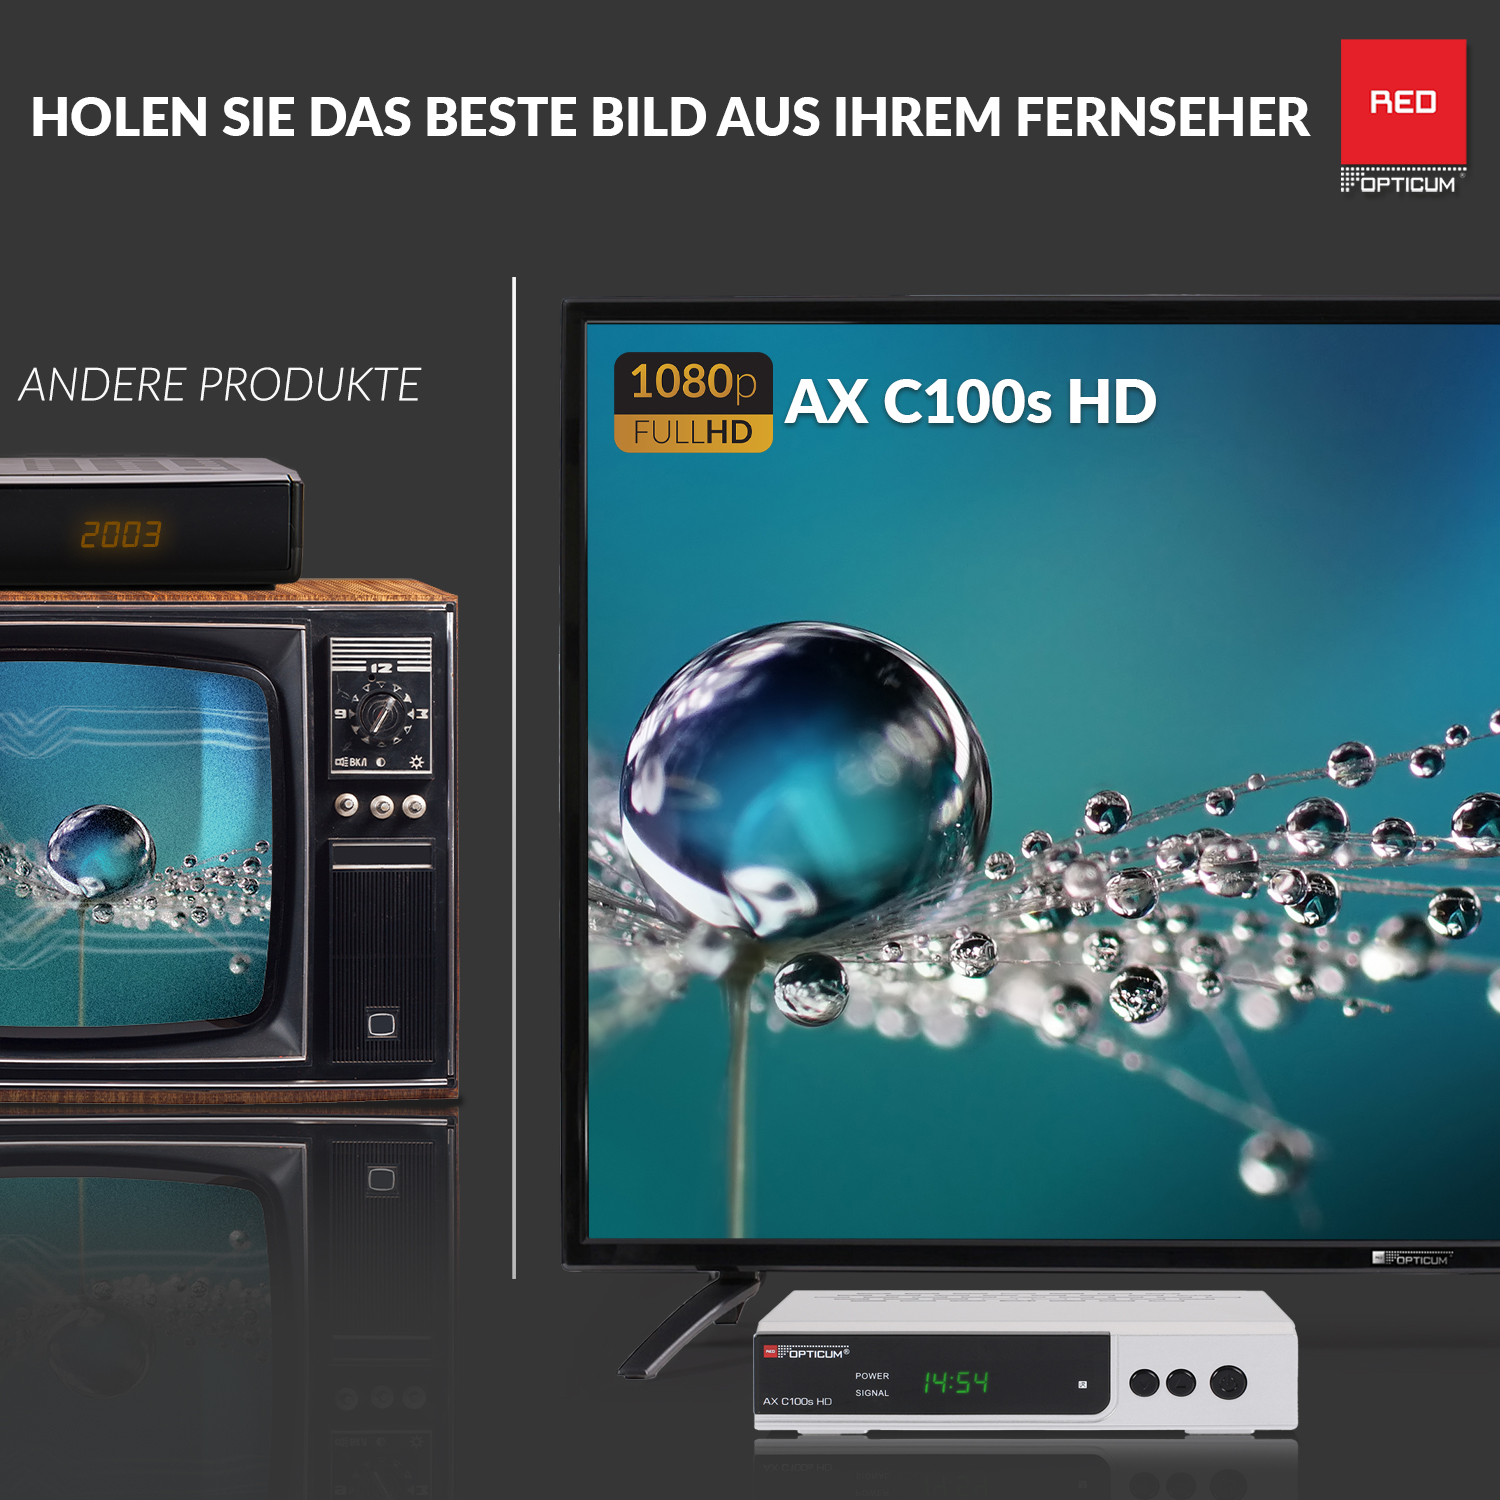 Receiver OPTICUM HD-EPG-HDMI-USB-SCART mit PVR-Funktion, HD DVB-C, Digitaler (HDTV, DVB-C2, RED DVB-C PVR-Aufnahmefunktion C100s AX silber) I Kabelreceiver Kabel-Receiver